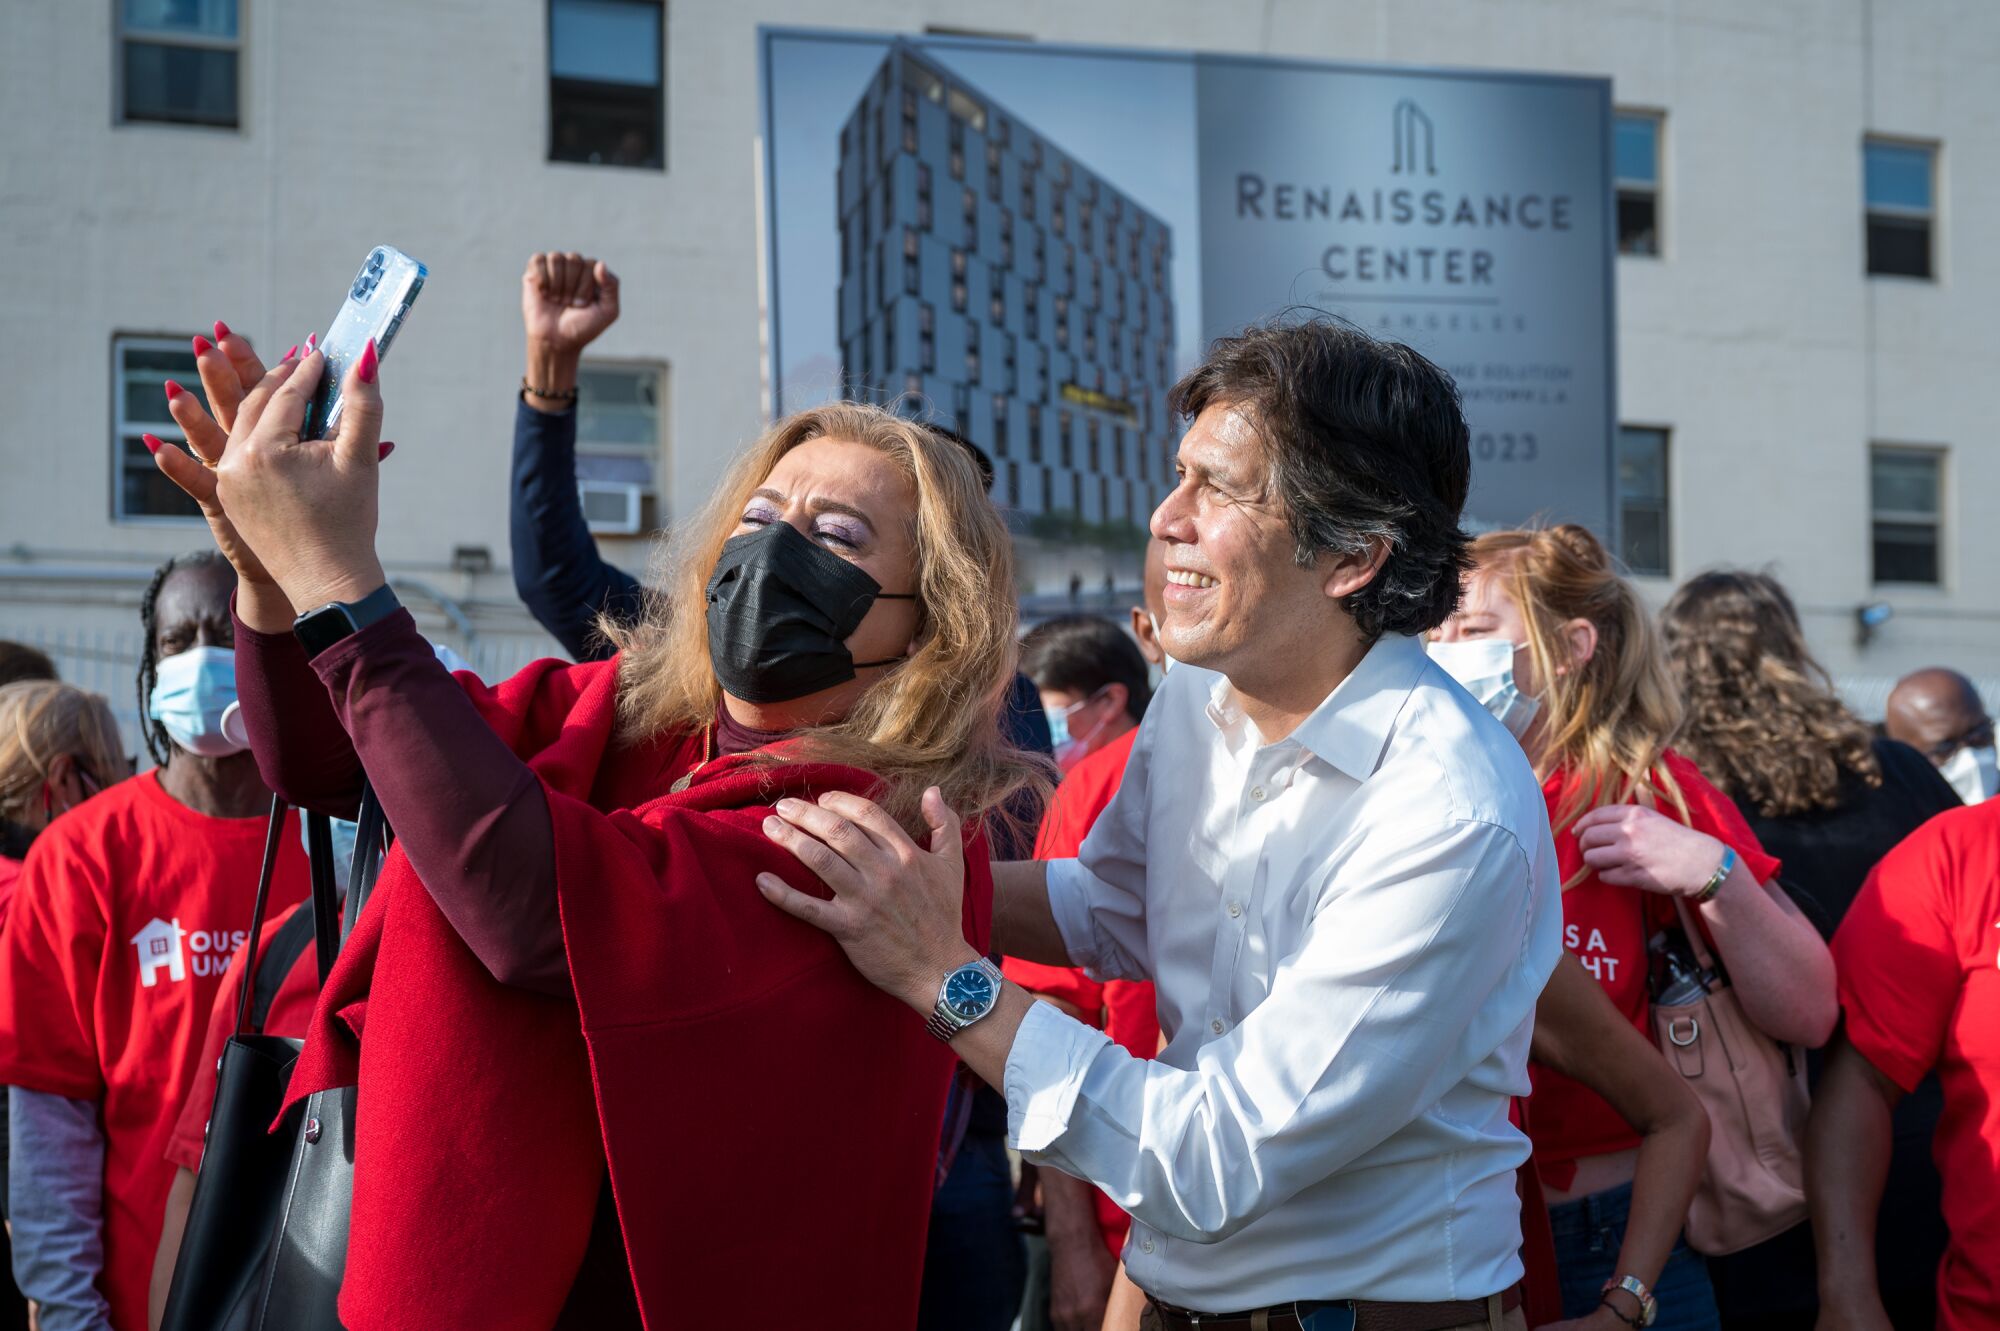 Los Angeles City Councilman Kevin de Leon poses during a selfie with a woman.